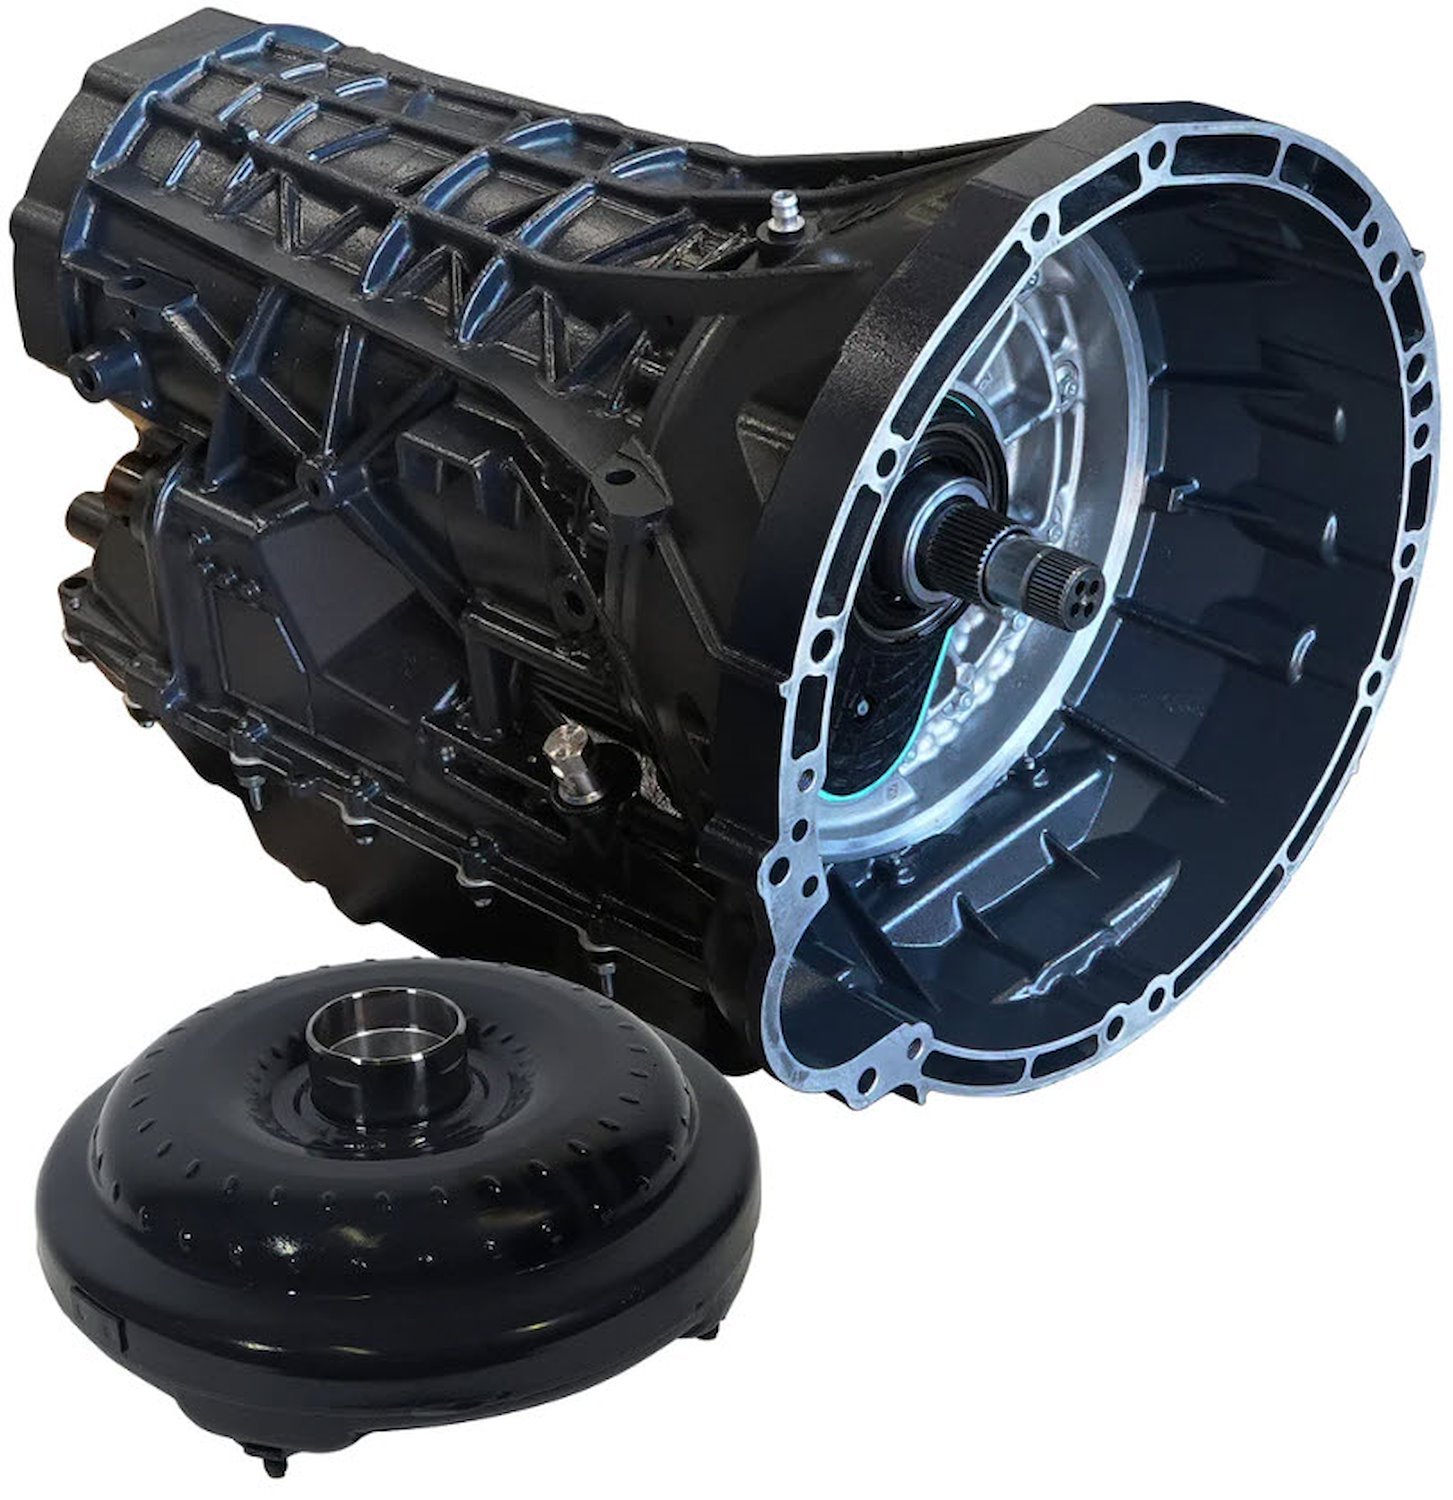 1064624SS RoadMaster 10R80 Transmission & Torque Converter for 2018-2020 Ford F-150 Trucks w/5.0L V8 Engine [4WD]